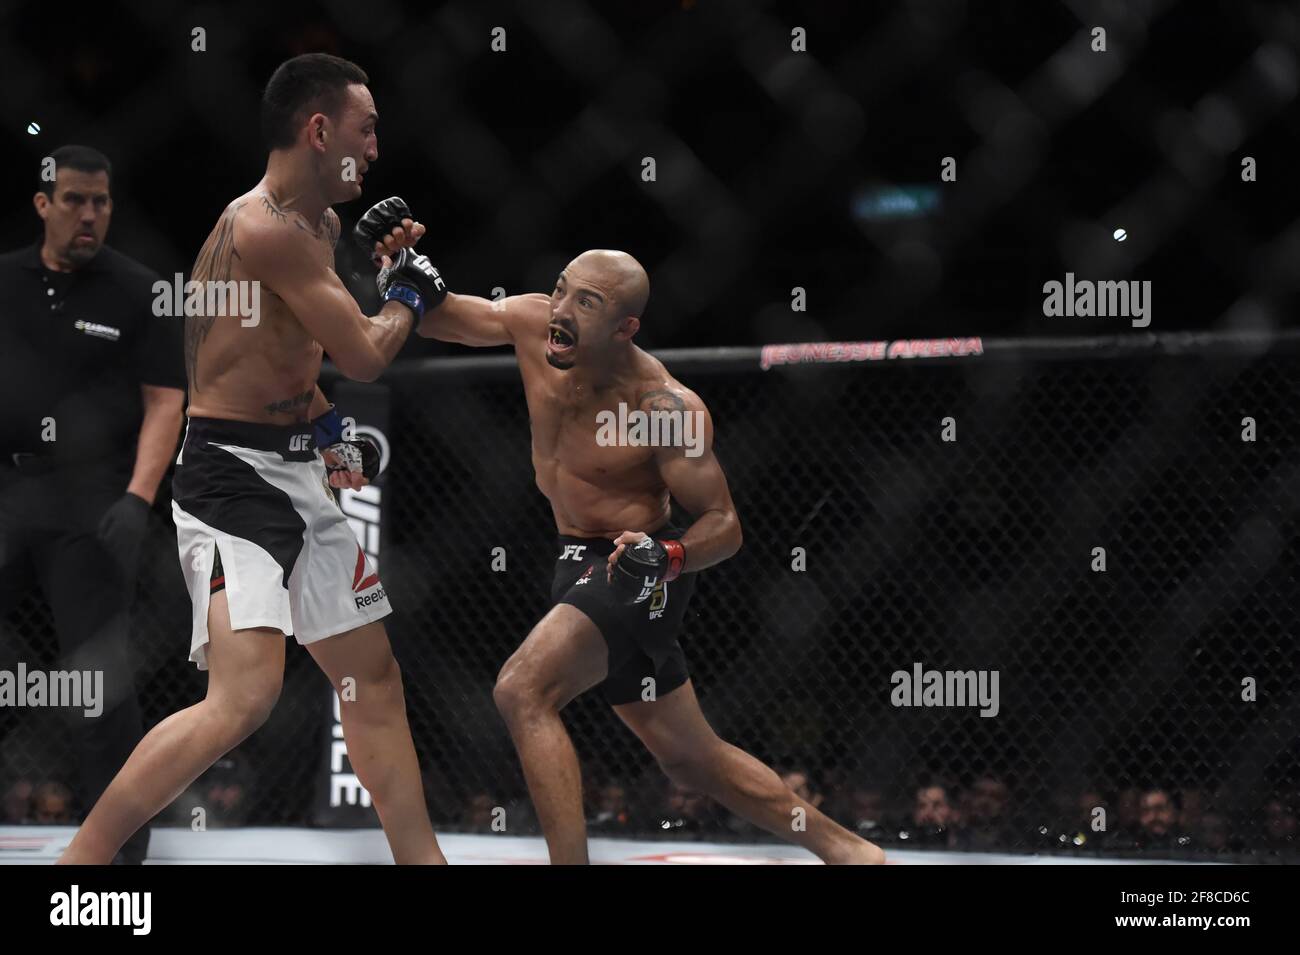 Rio de Janeiro-Brasile 10 gennaio 2020, UFC e i suoi combattimenti in Brasile Foto Stock